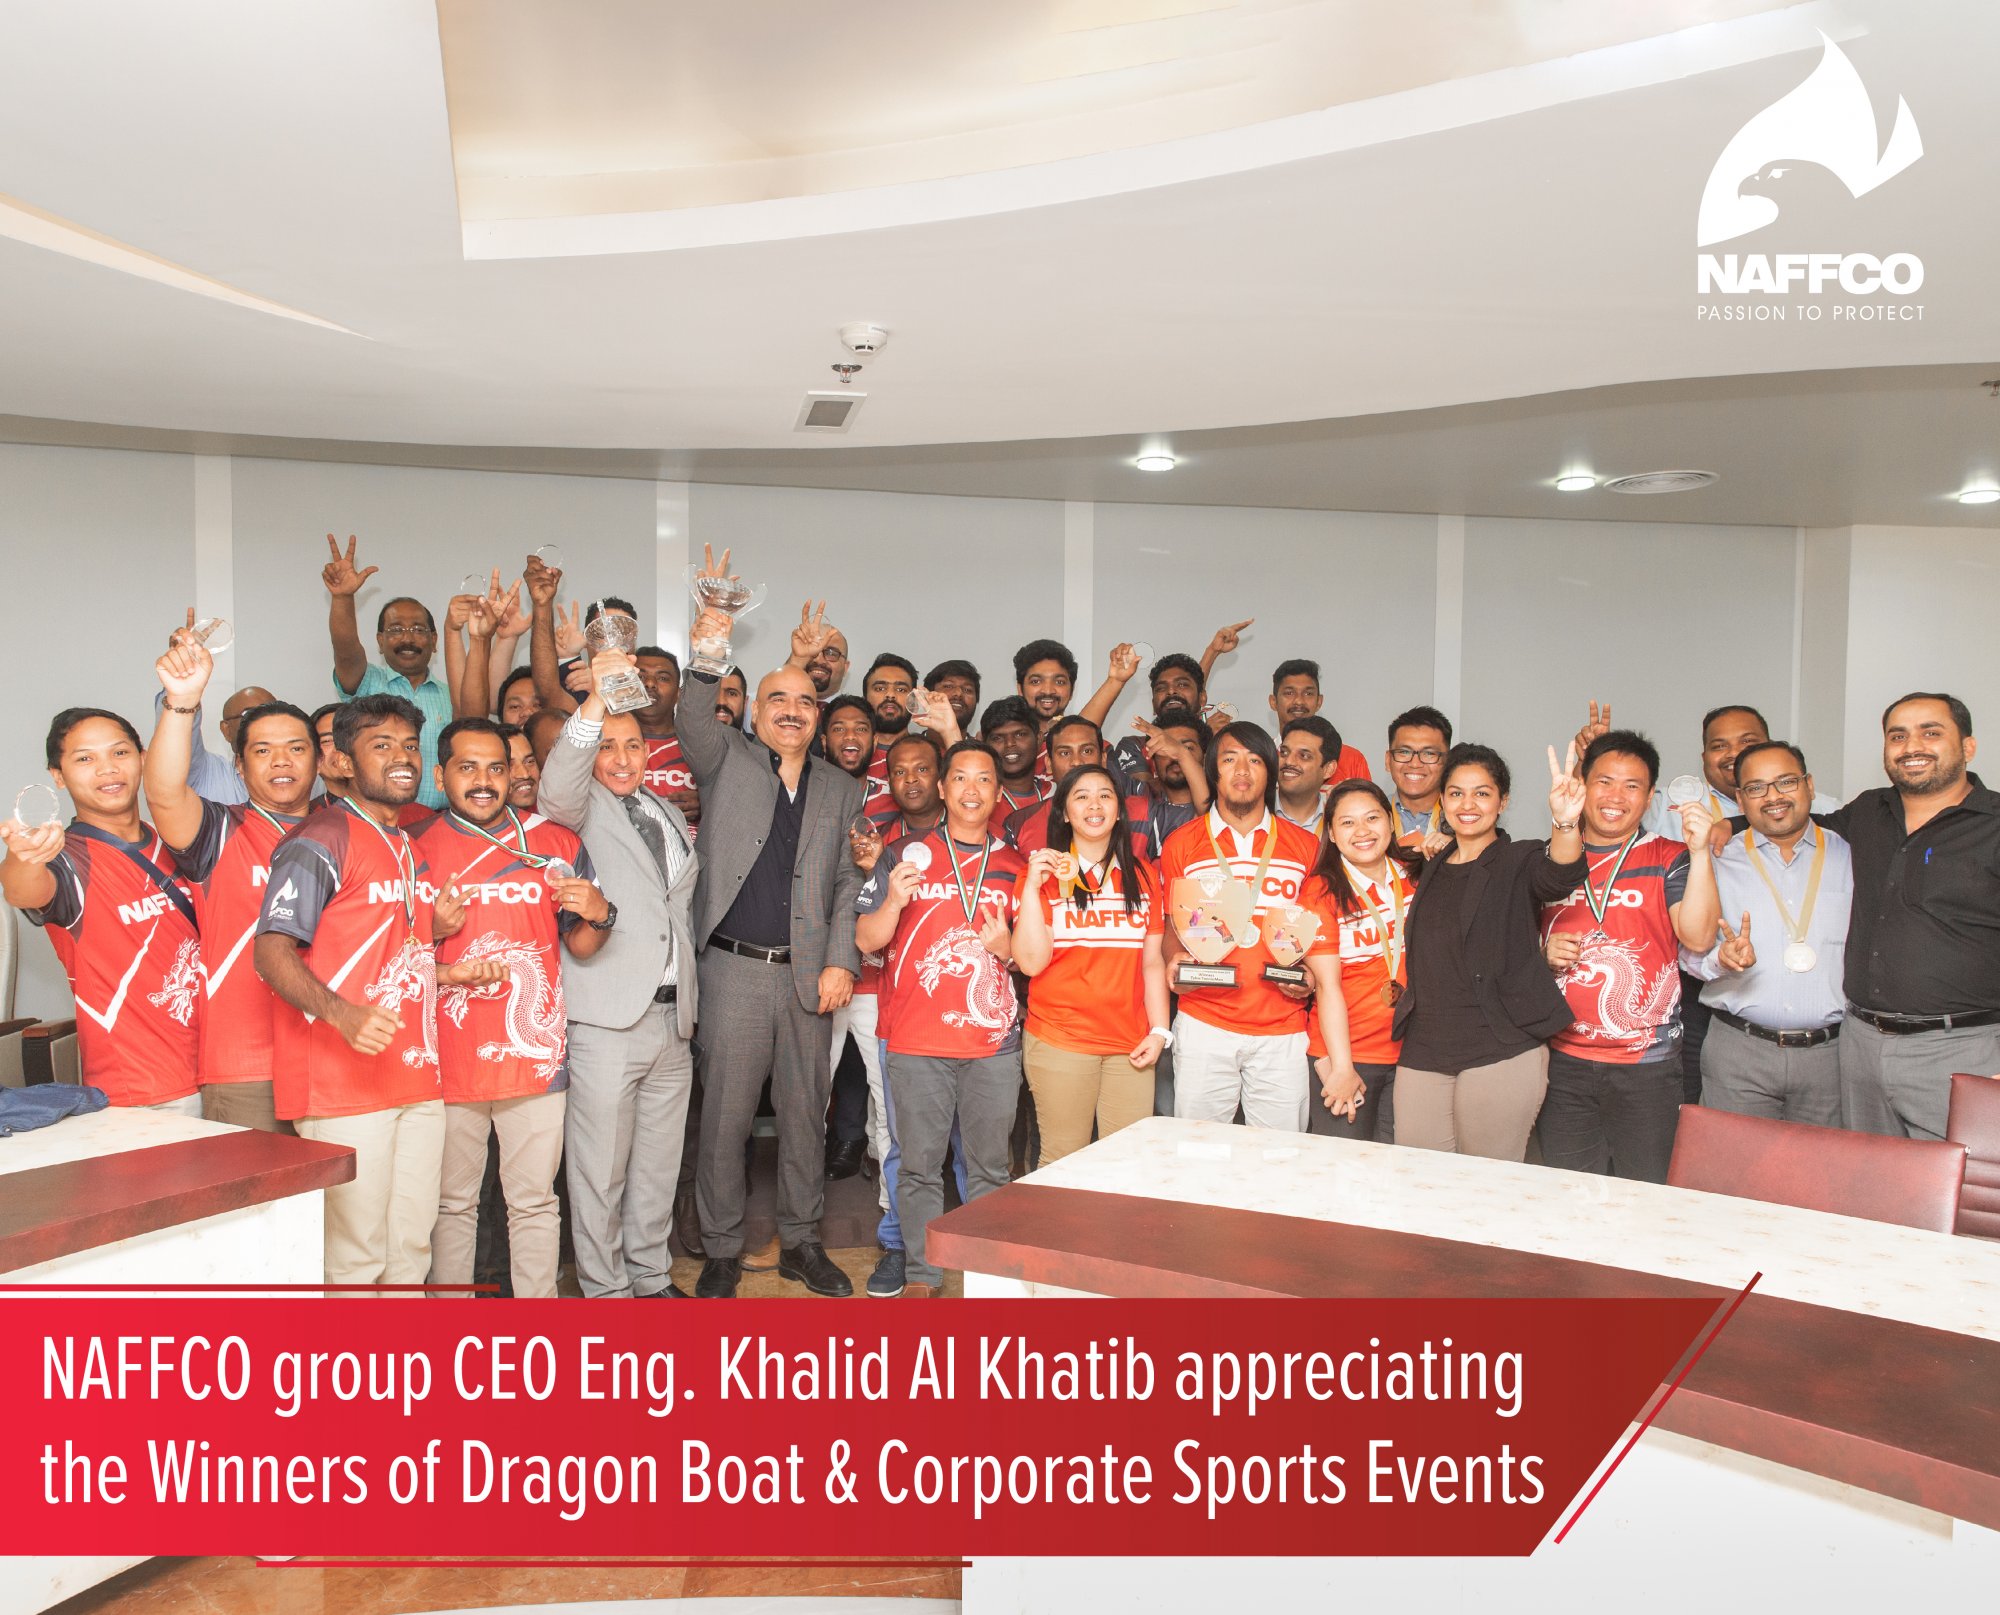 NAFFCO Group CEO Eng. Khalid Al Khatib congratulates the NAFFCO Winning teams